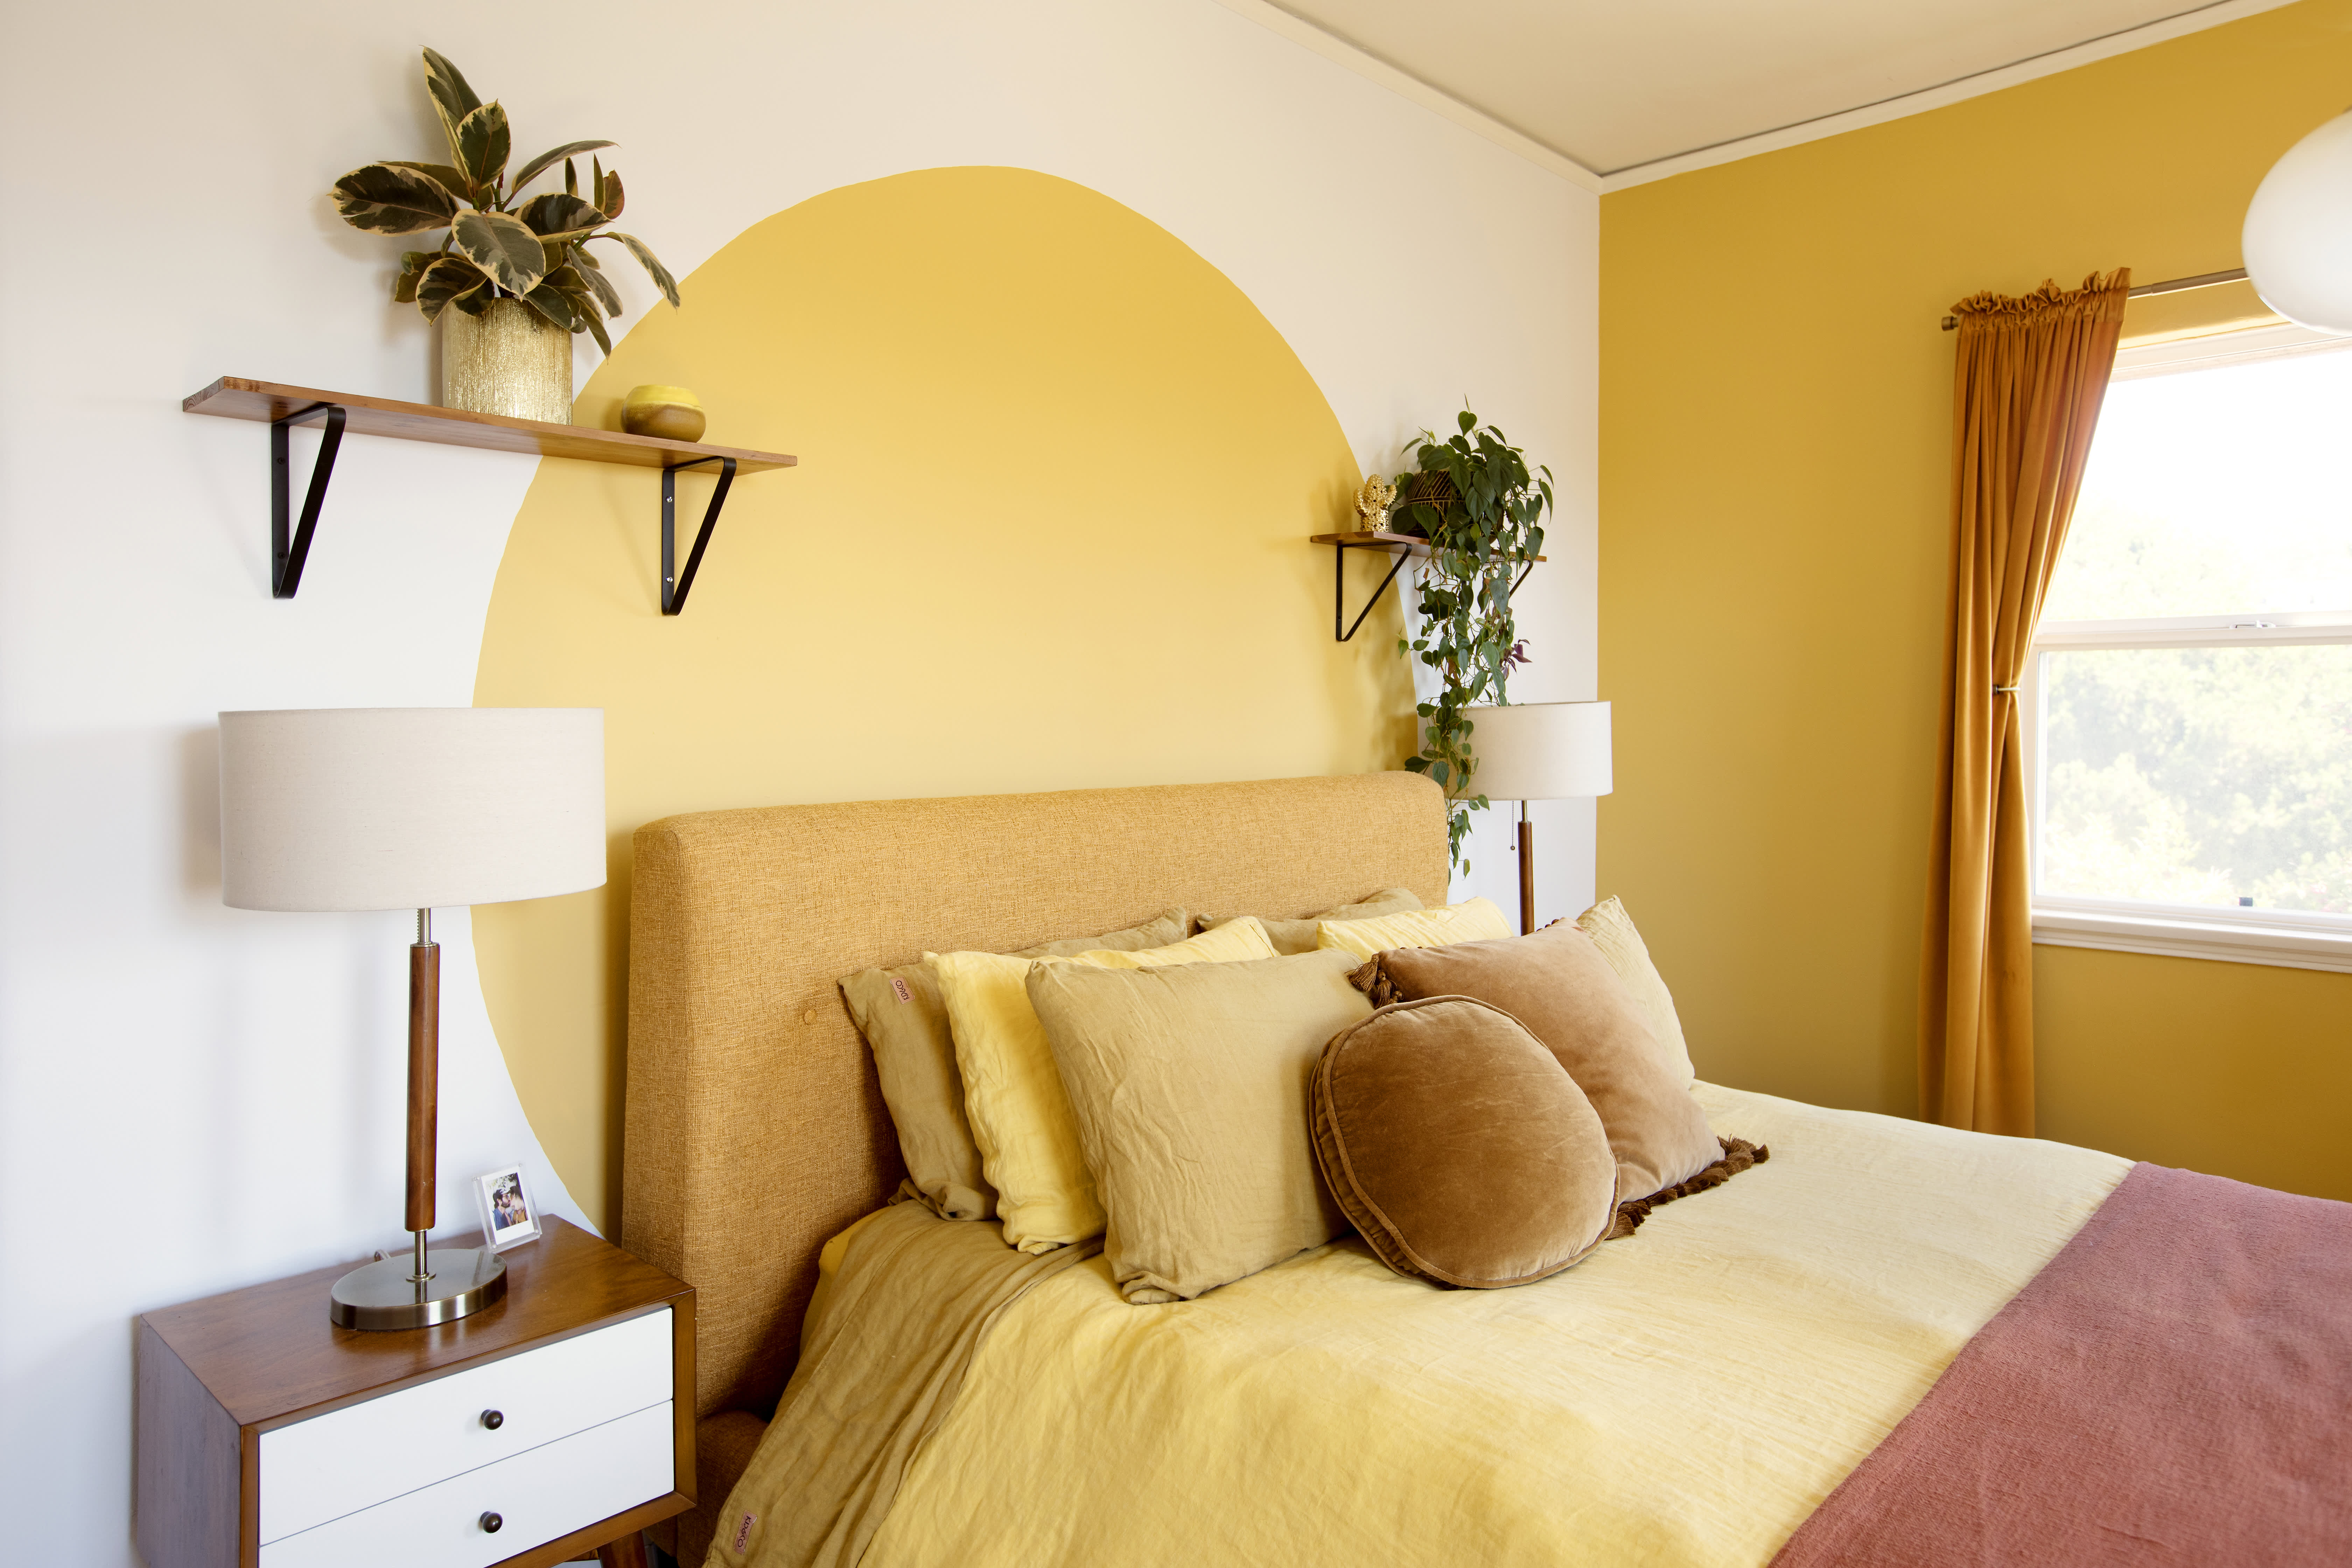 apartment bedroom ideas